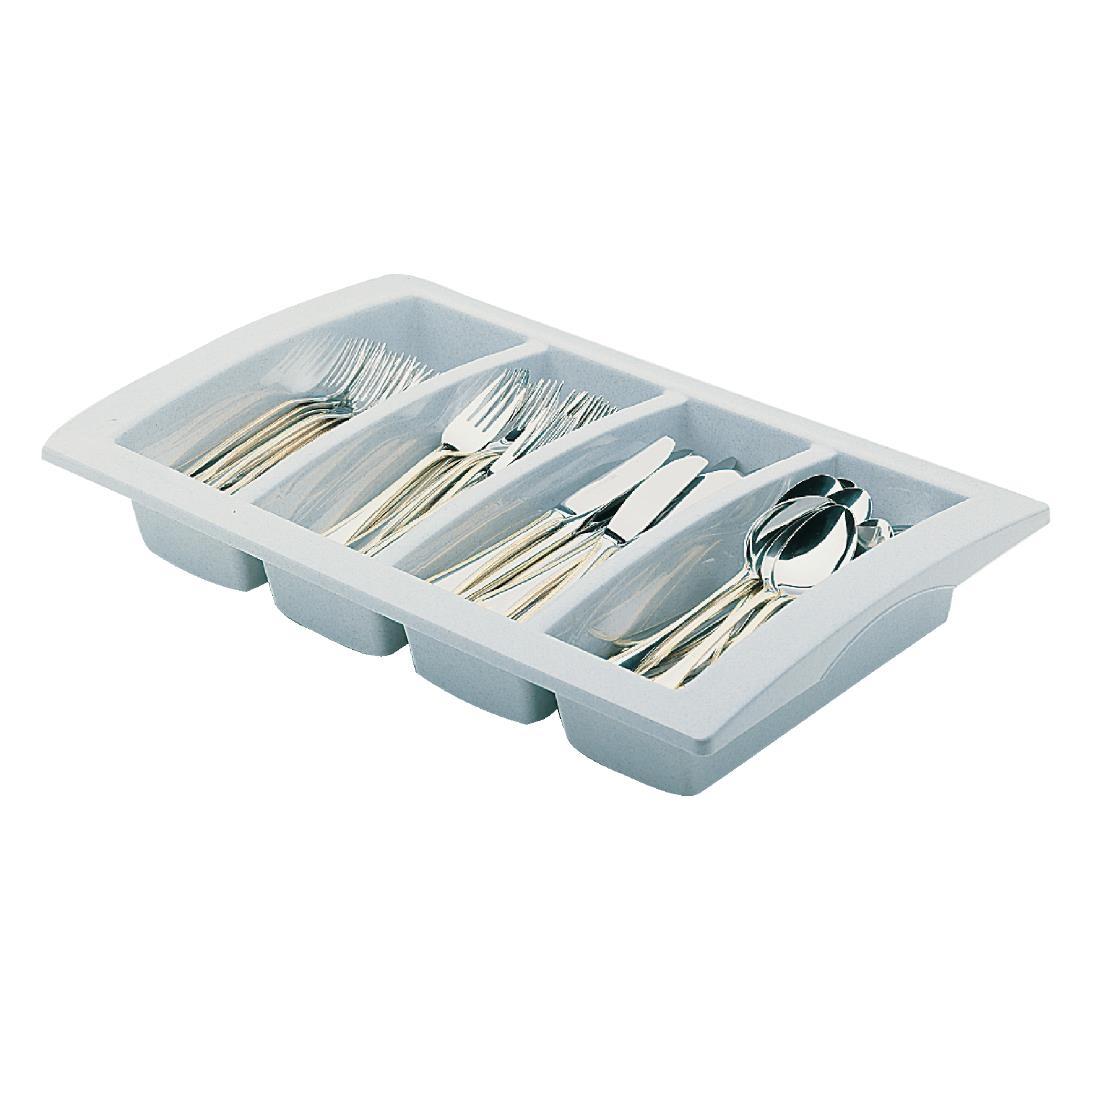 Araven Stackable Cutlery Tray - J284  - 1